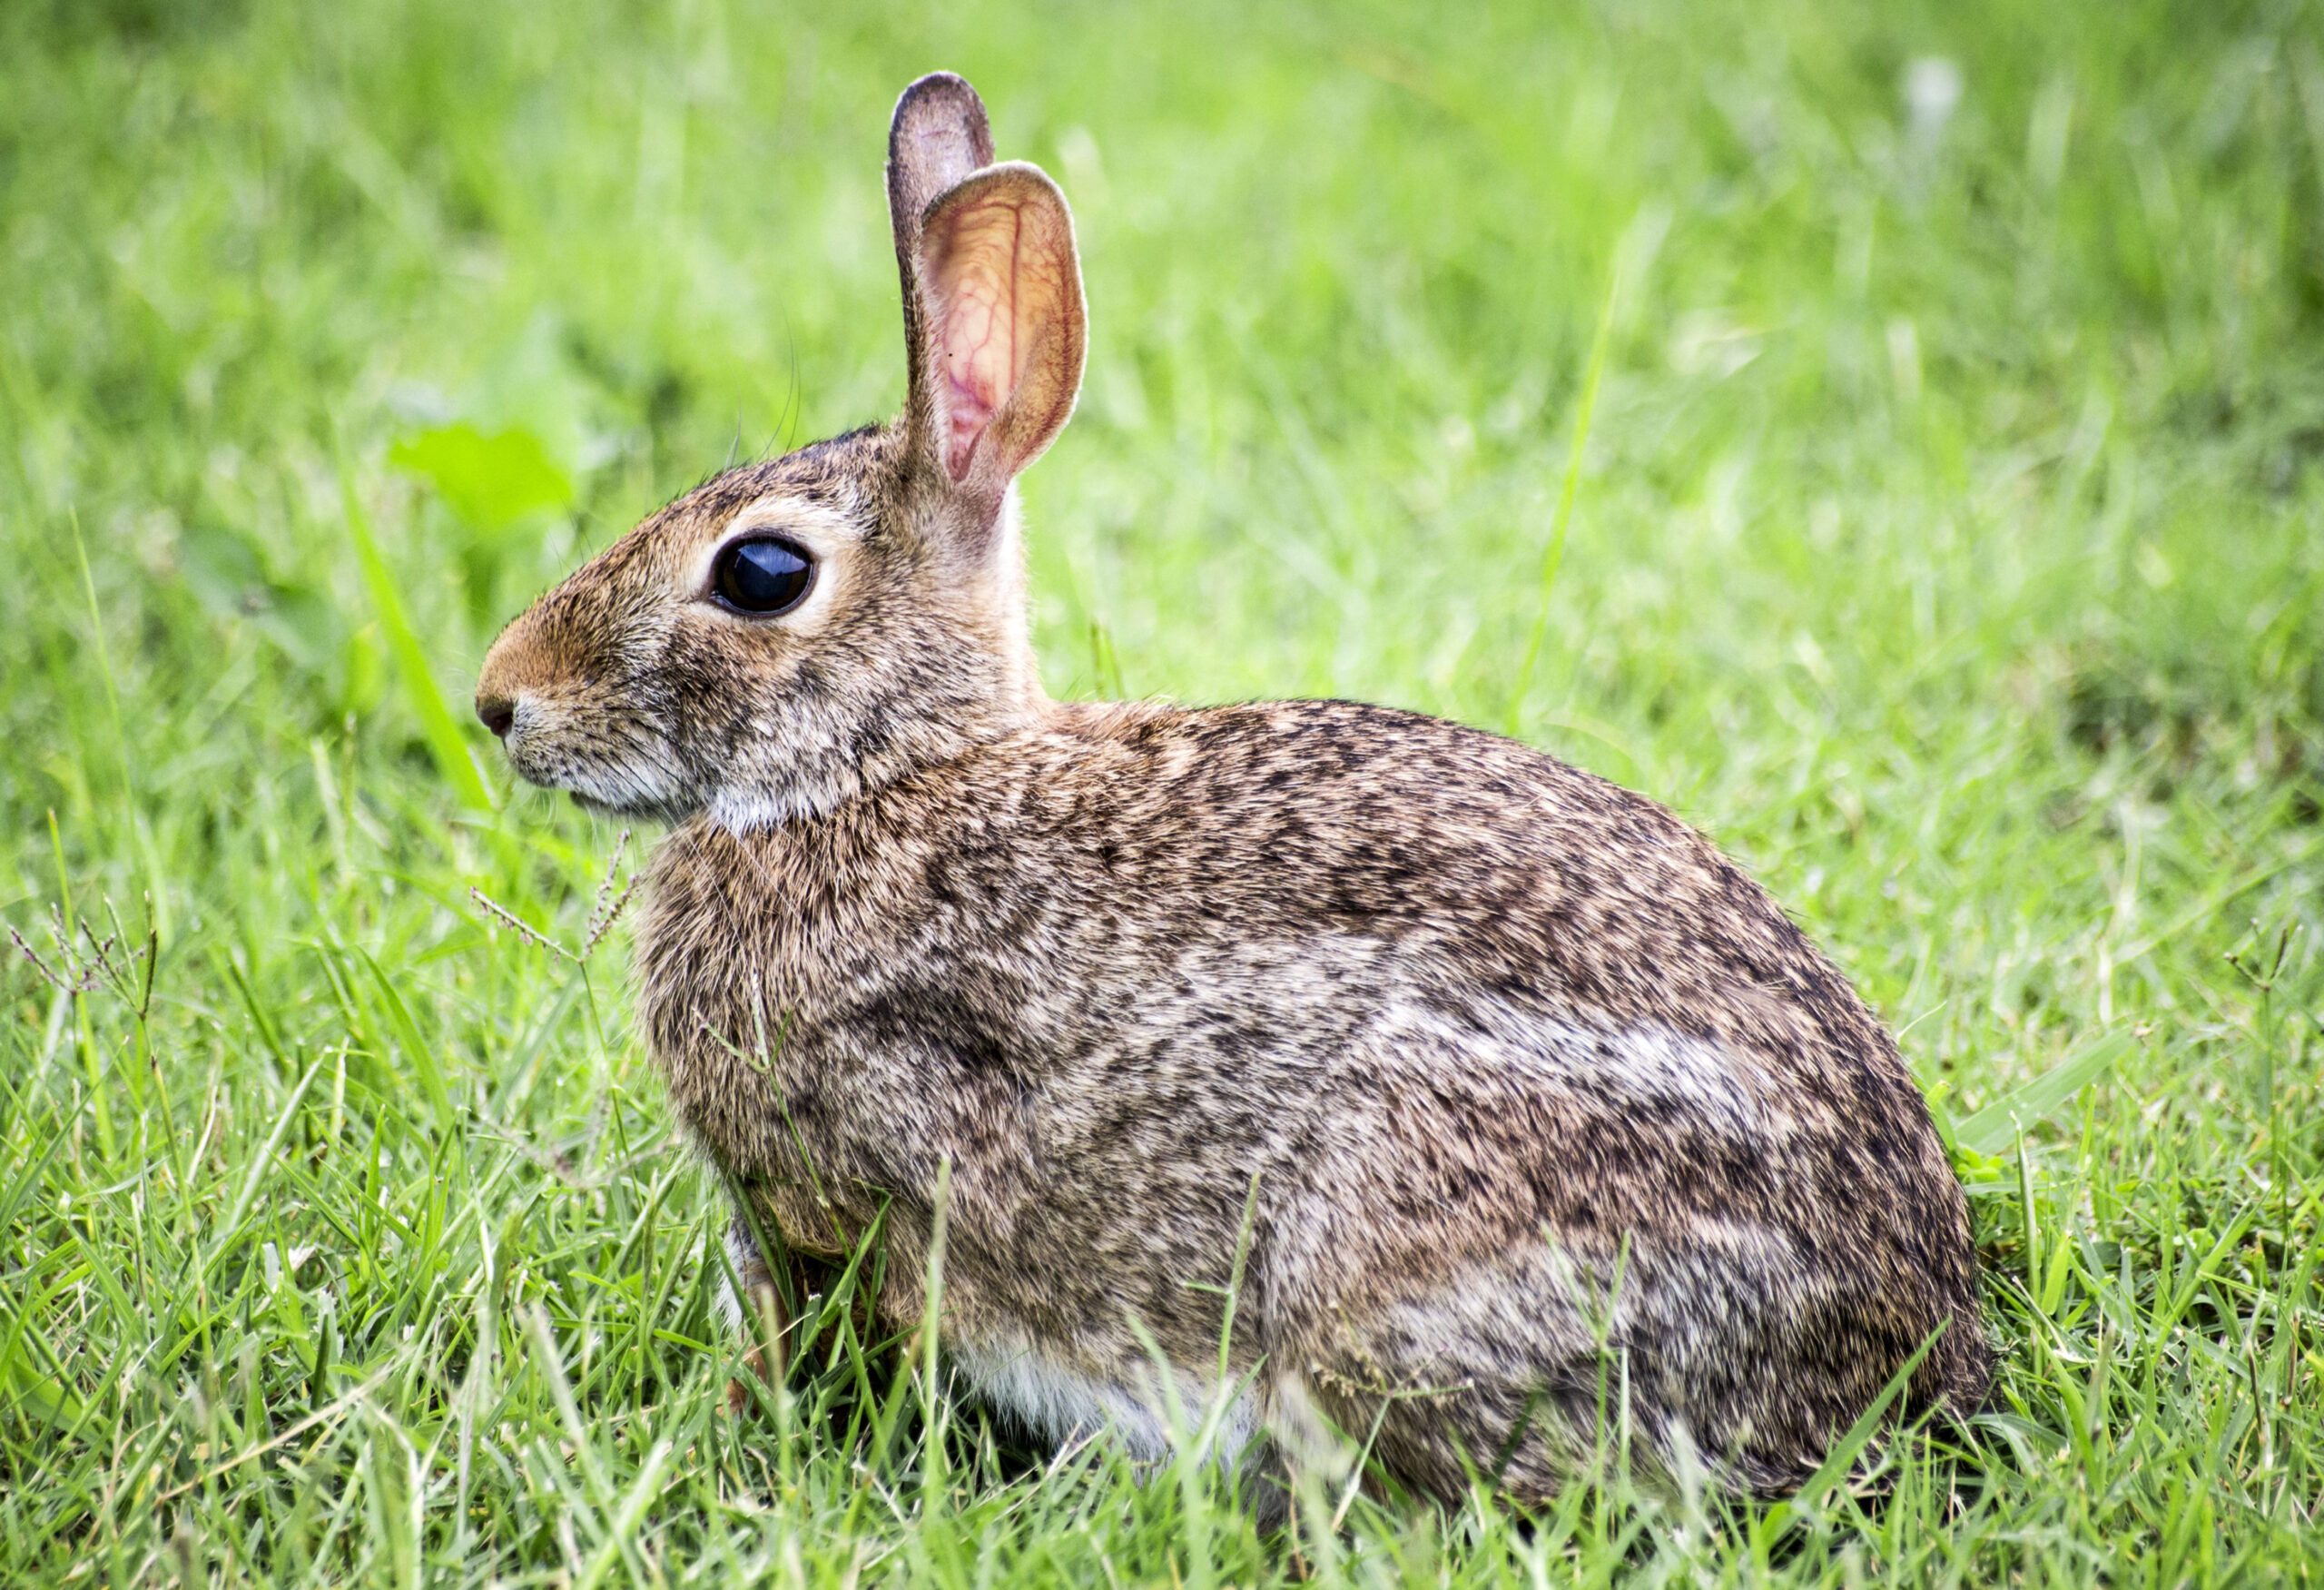 Should I Let My Domestic Rabbit Run Free?